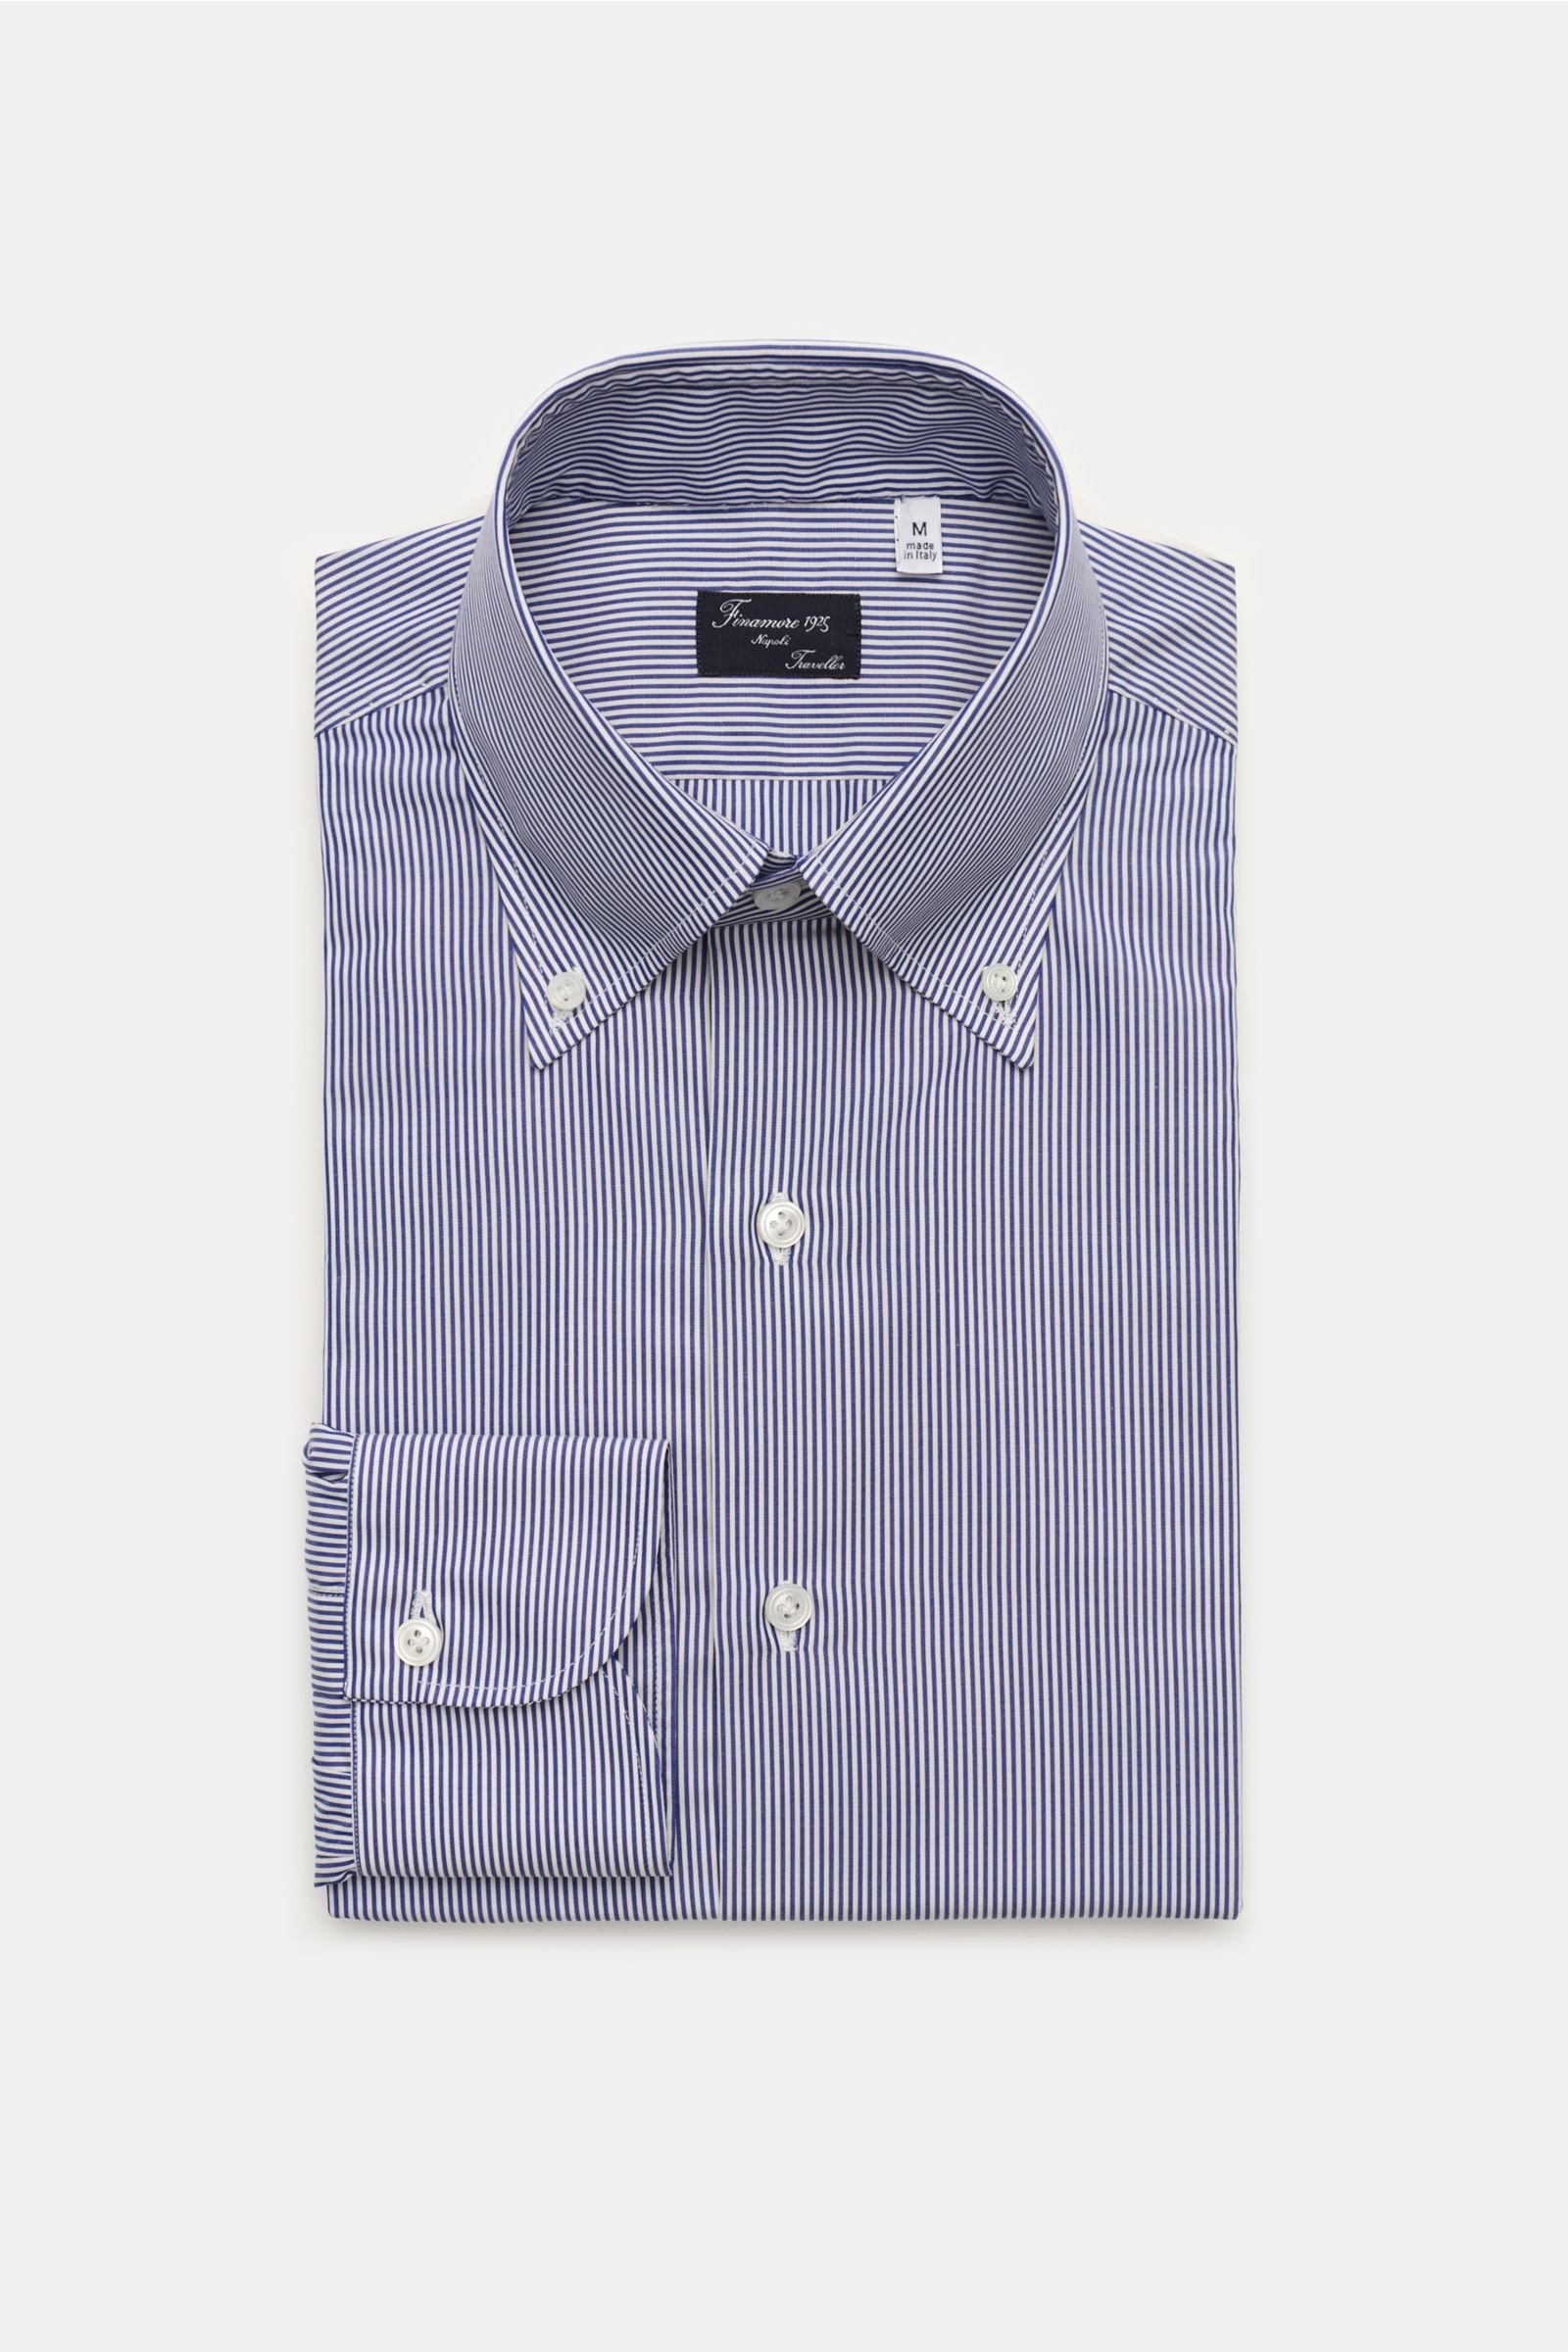 Business shirt 'Lucio Napoli' button-down collar navy/white striped